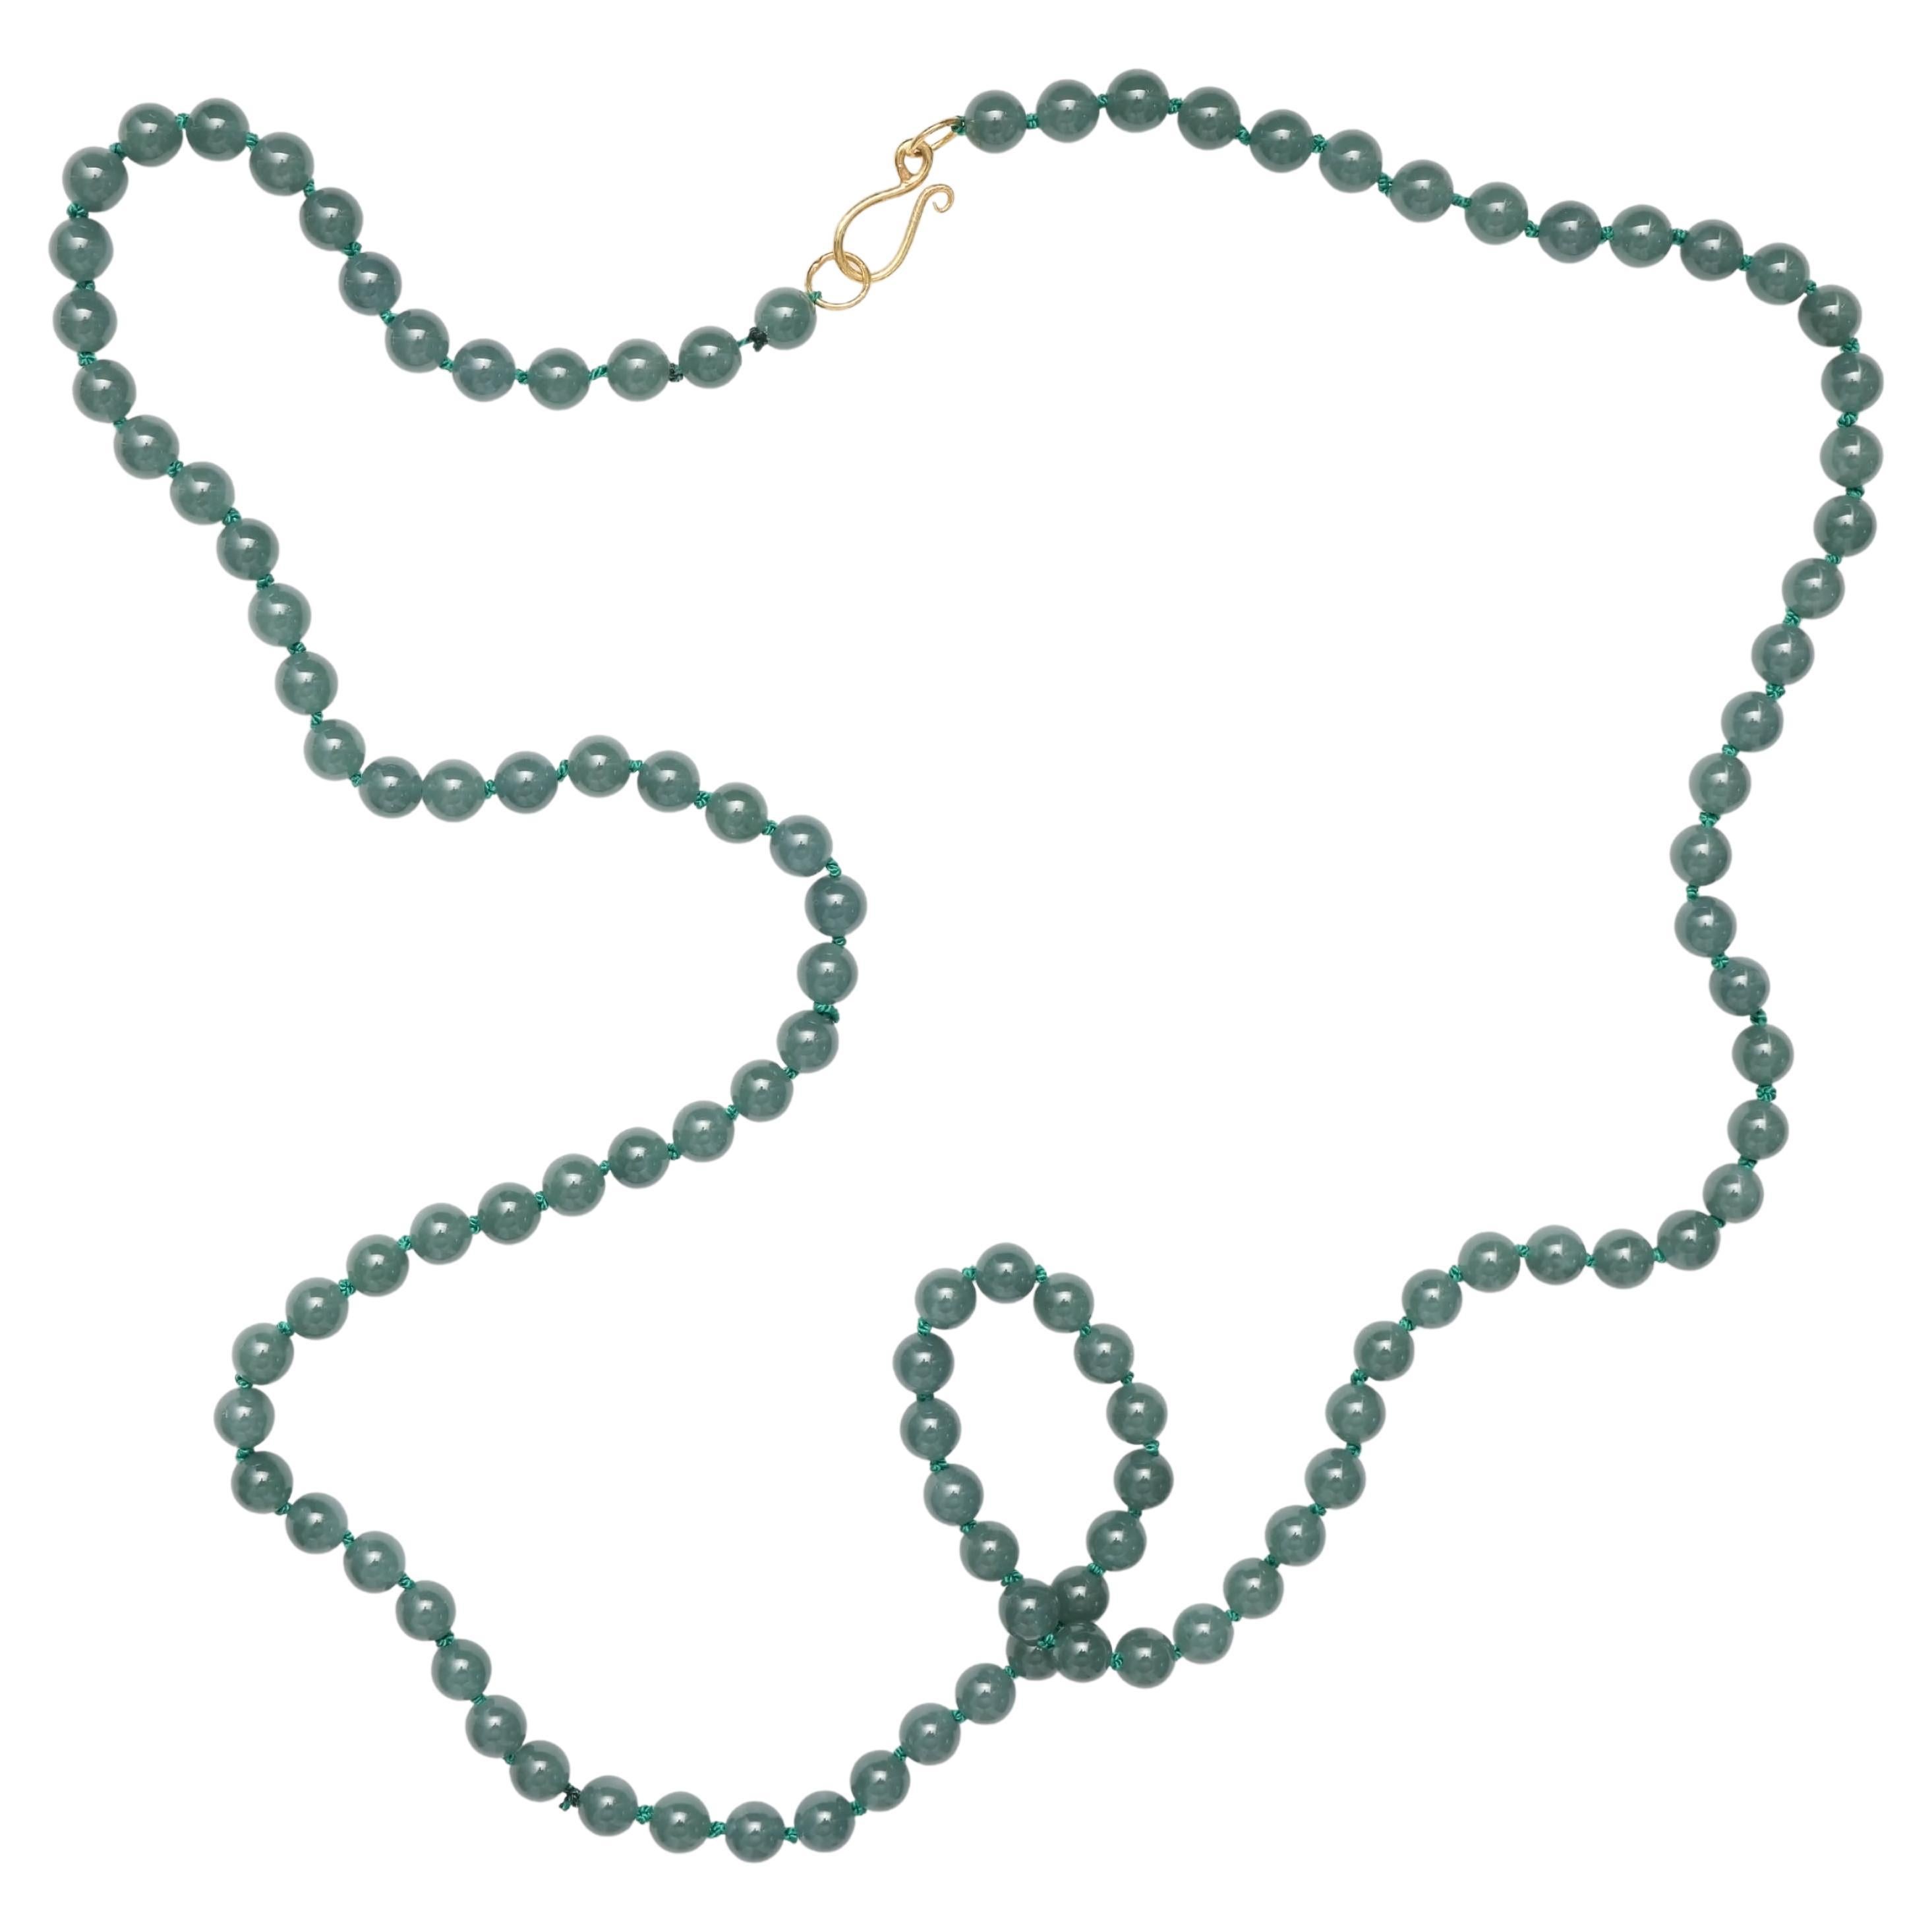 Collier de perles de jade translucide vert bleuté certifié 